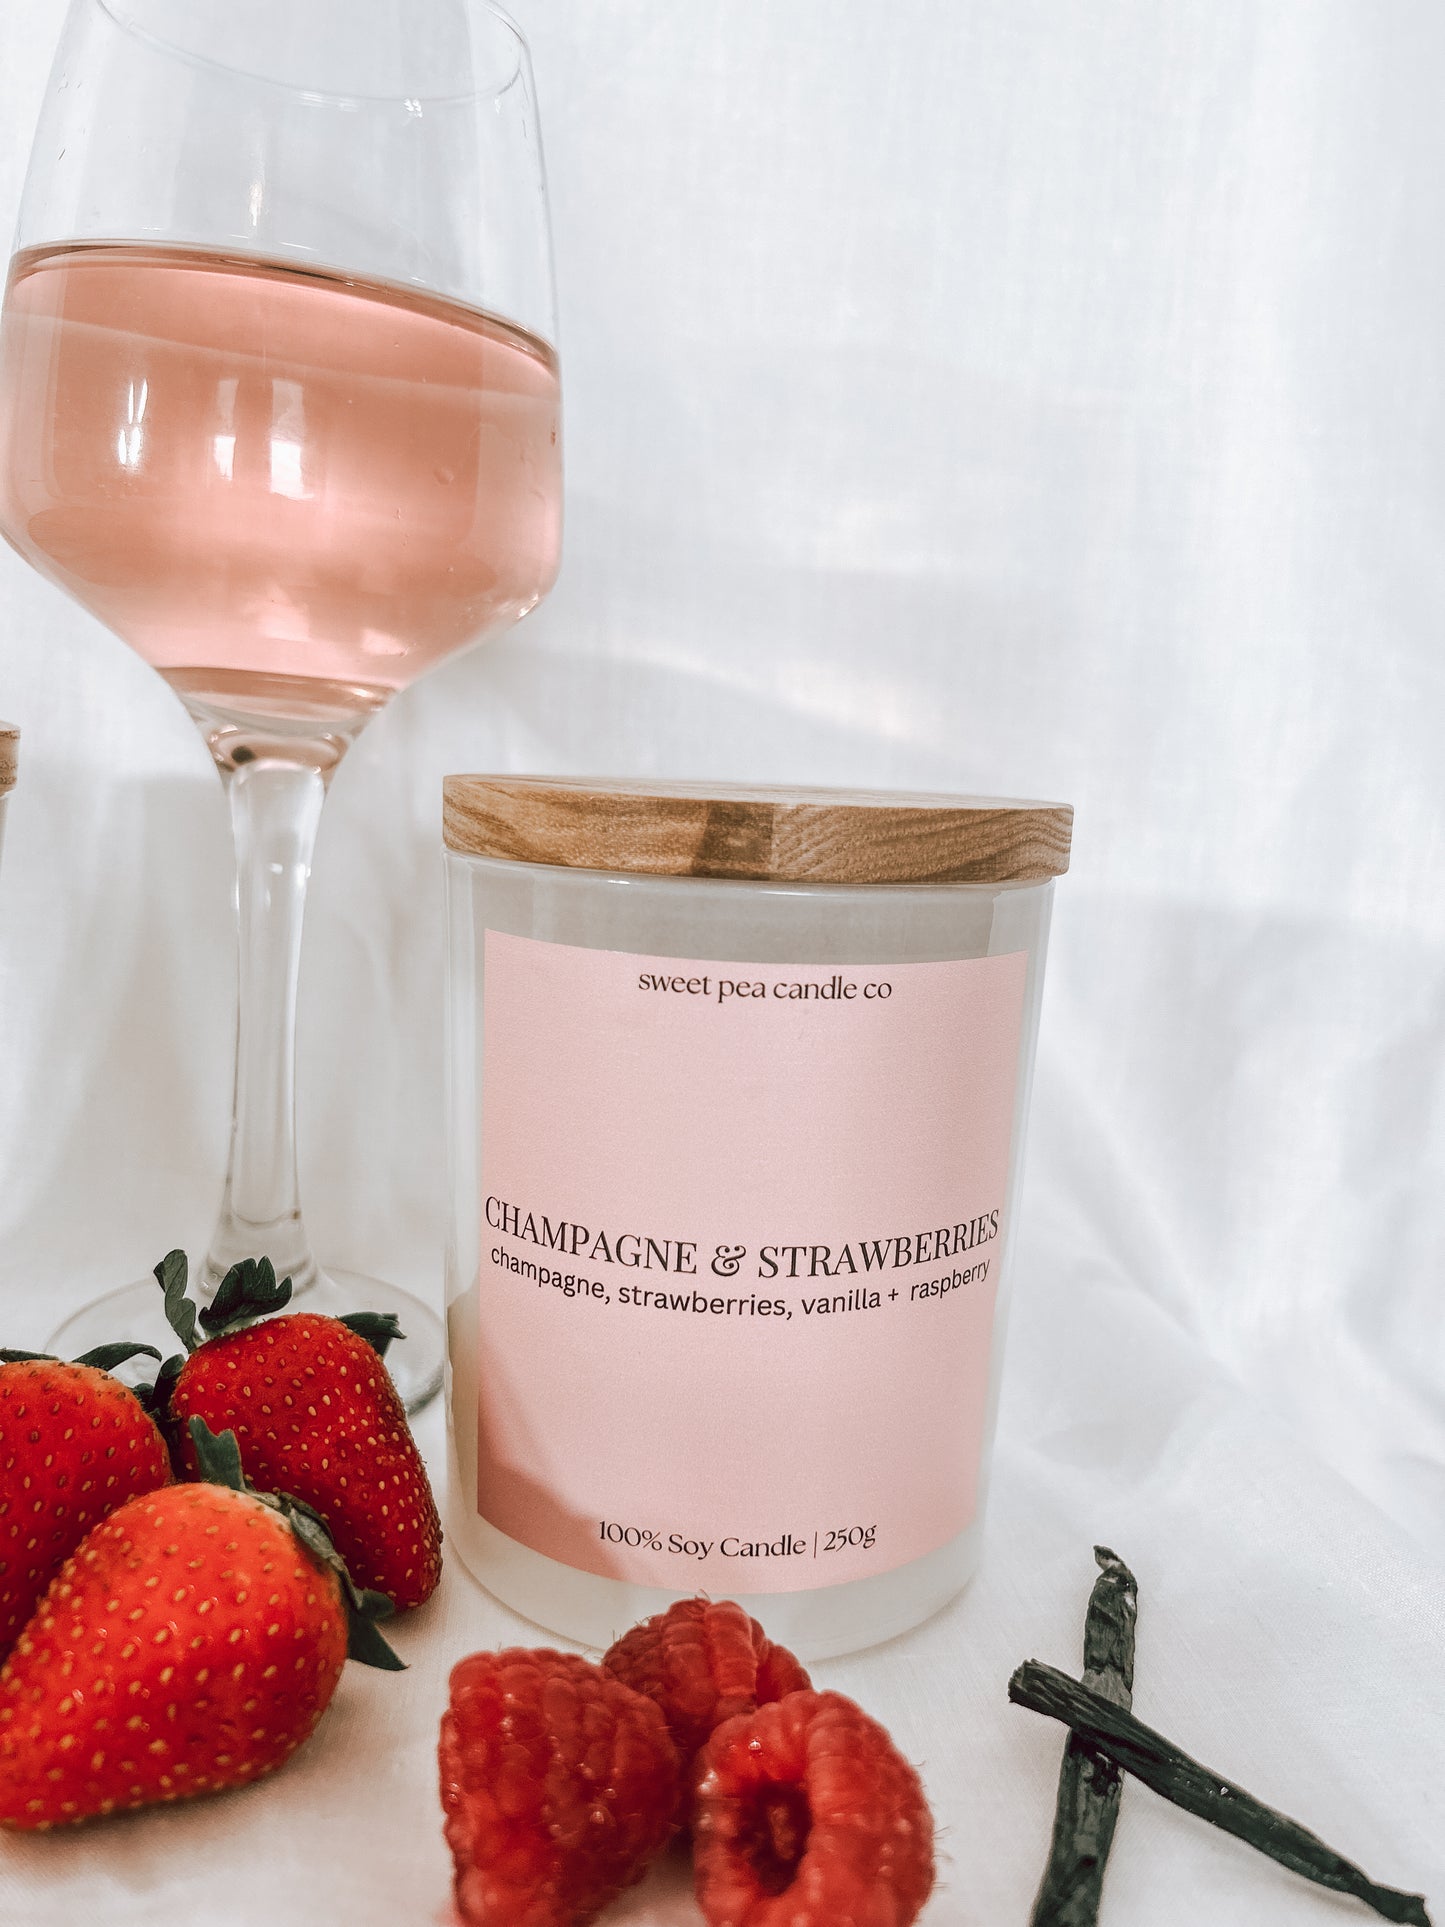 Champagne & Strawberries | Champagne, Strawberries, Vanilla + Raspberry